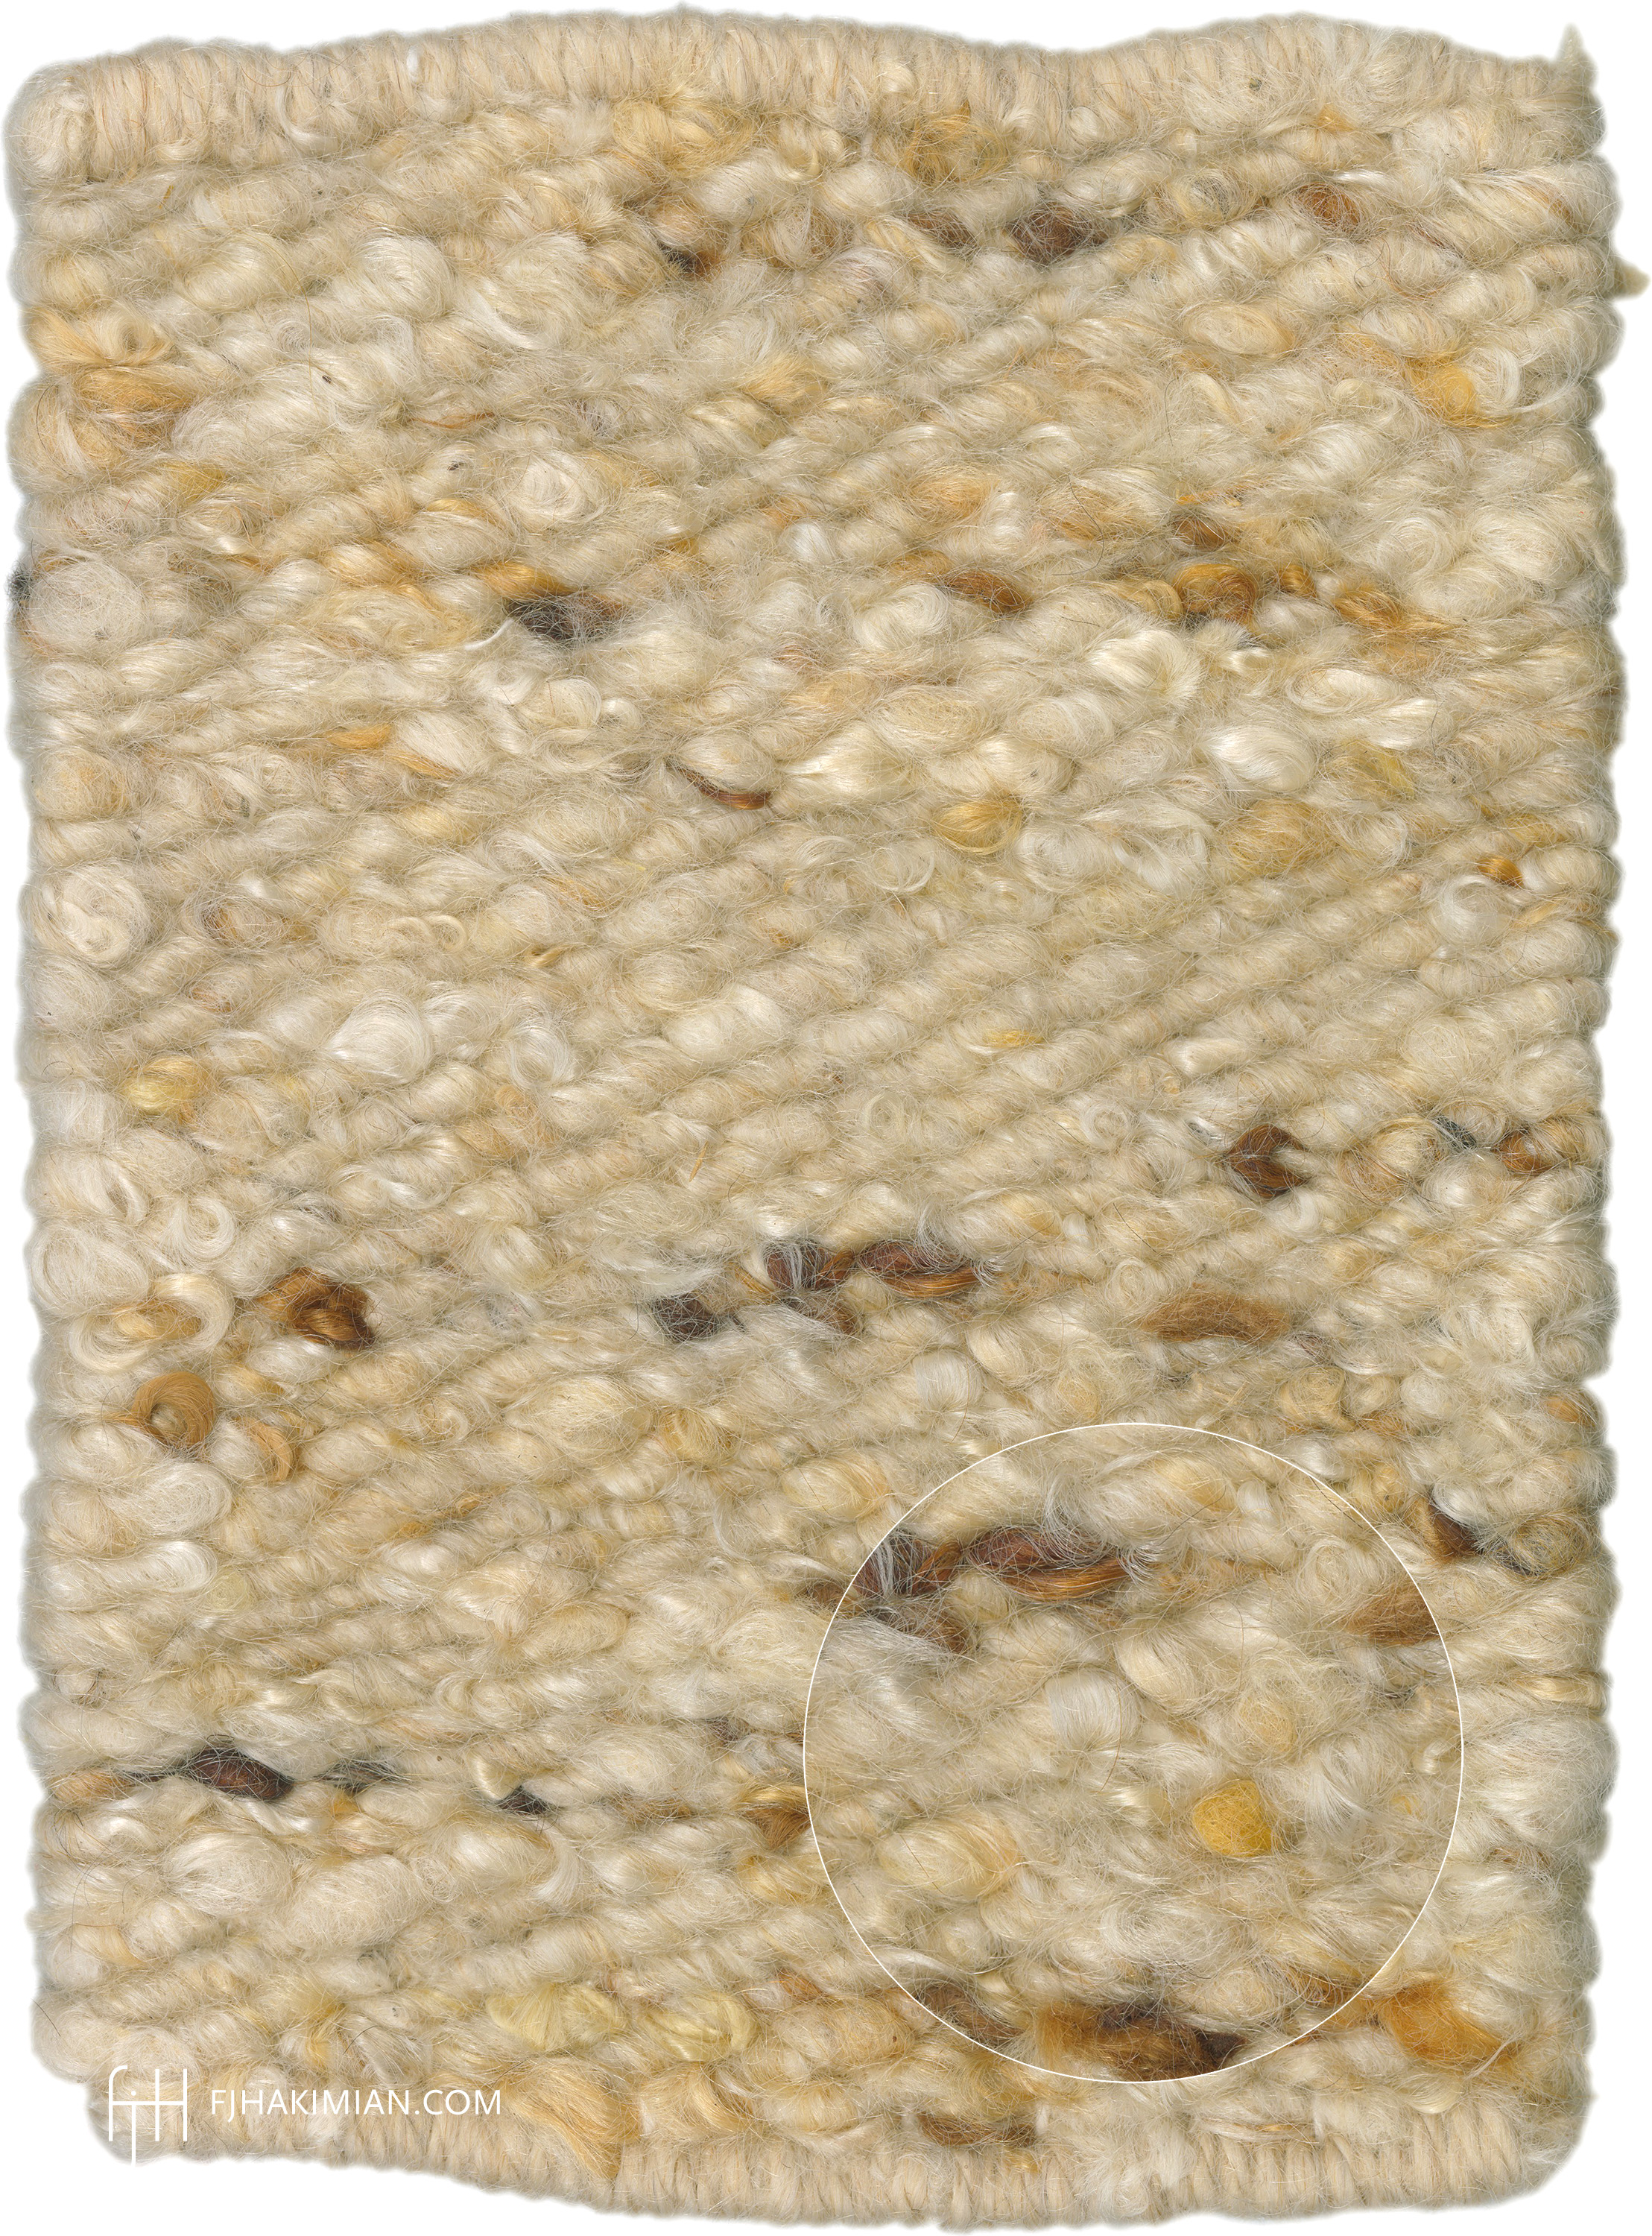 77802 KL-Marbled Tabby Custom Carpet | FJ Hakimian Carpet Gallery, New York 